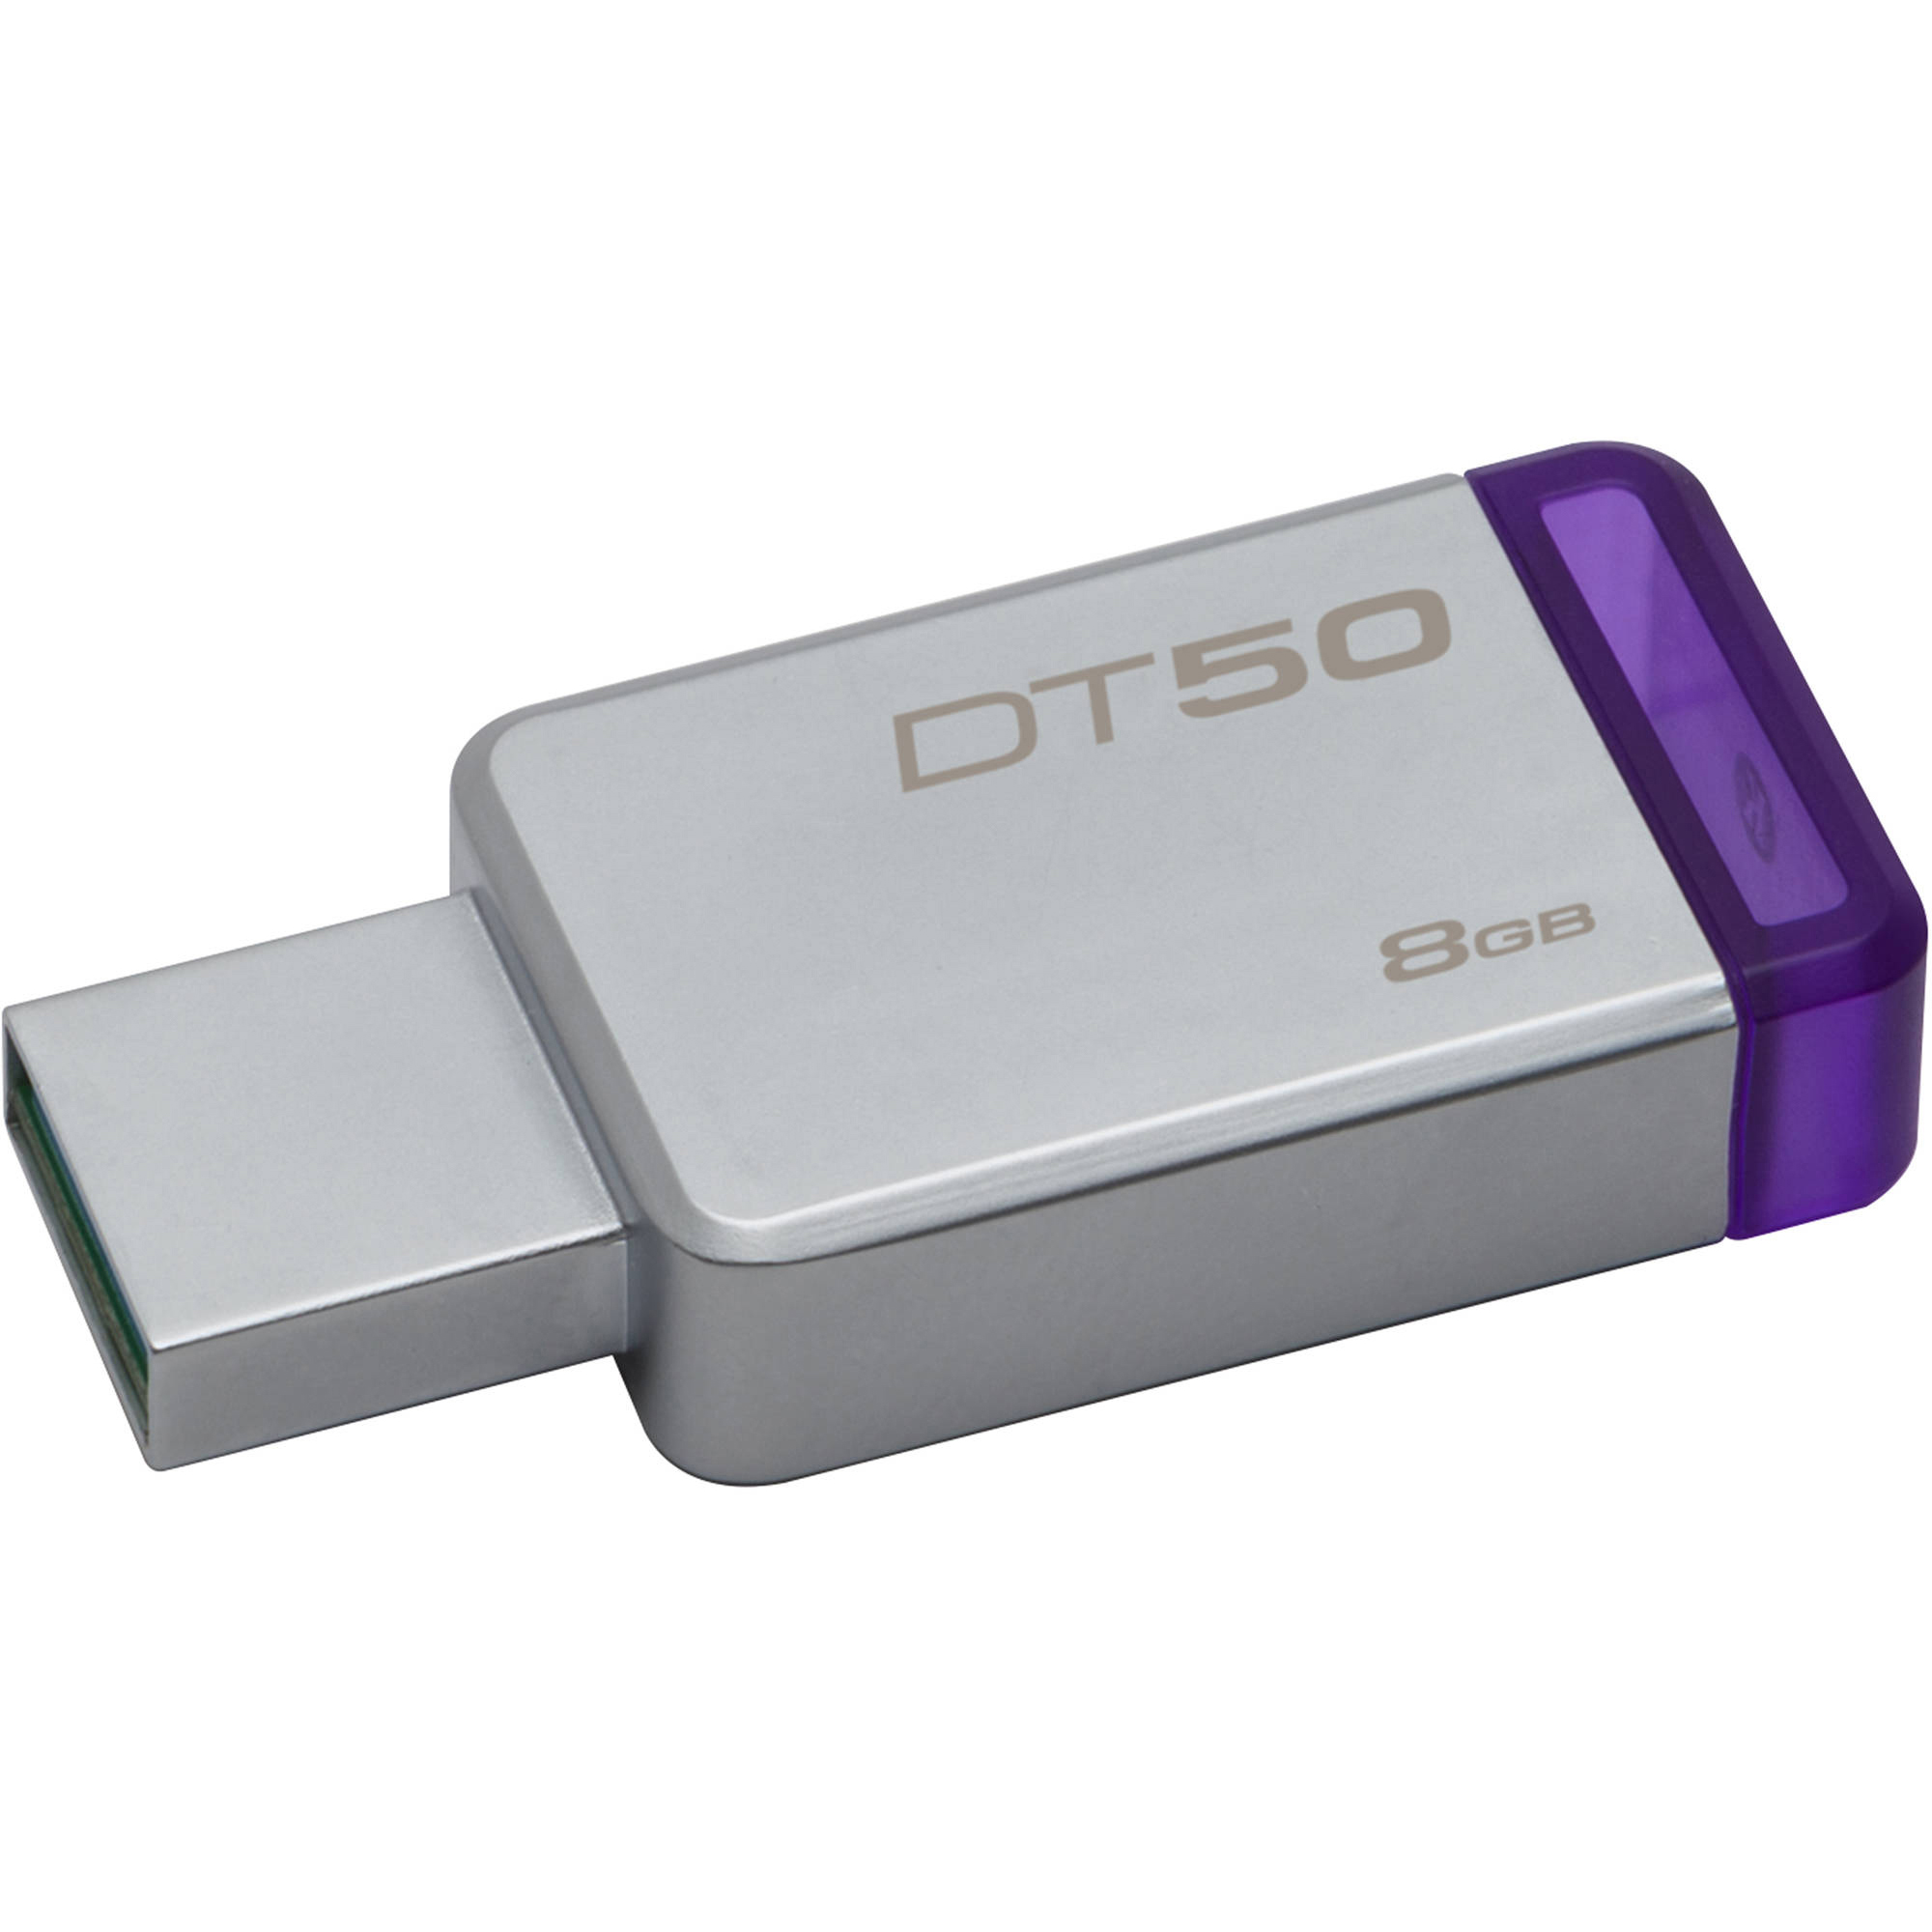 Original Kingston DataTraveler 50 8GB USB 3.0 Flash Drive (DT50/8GB)